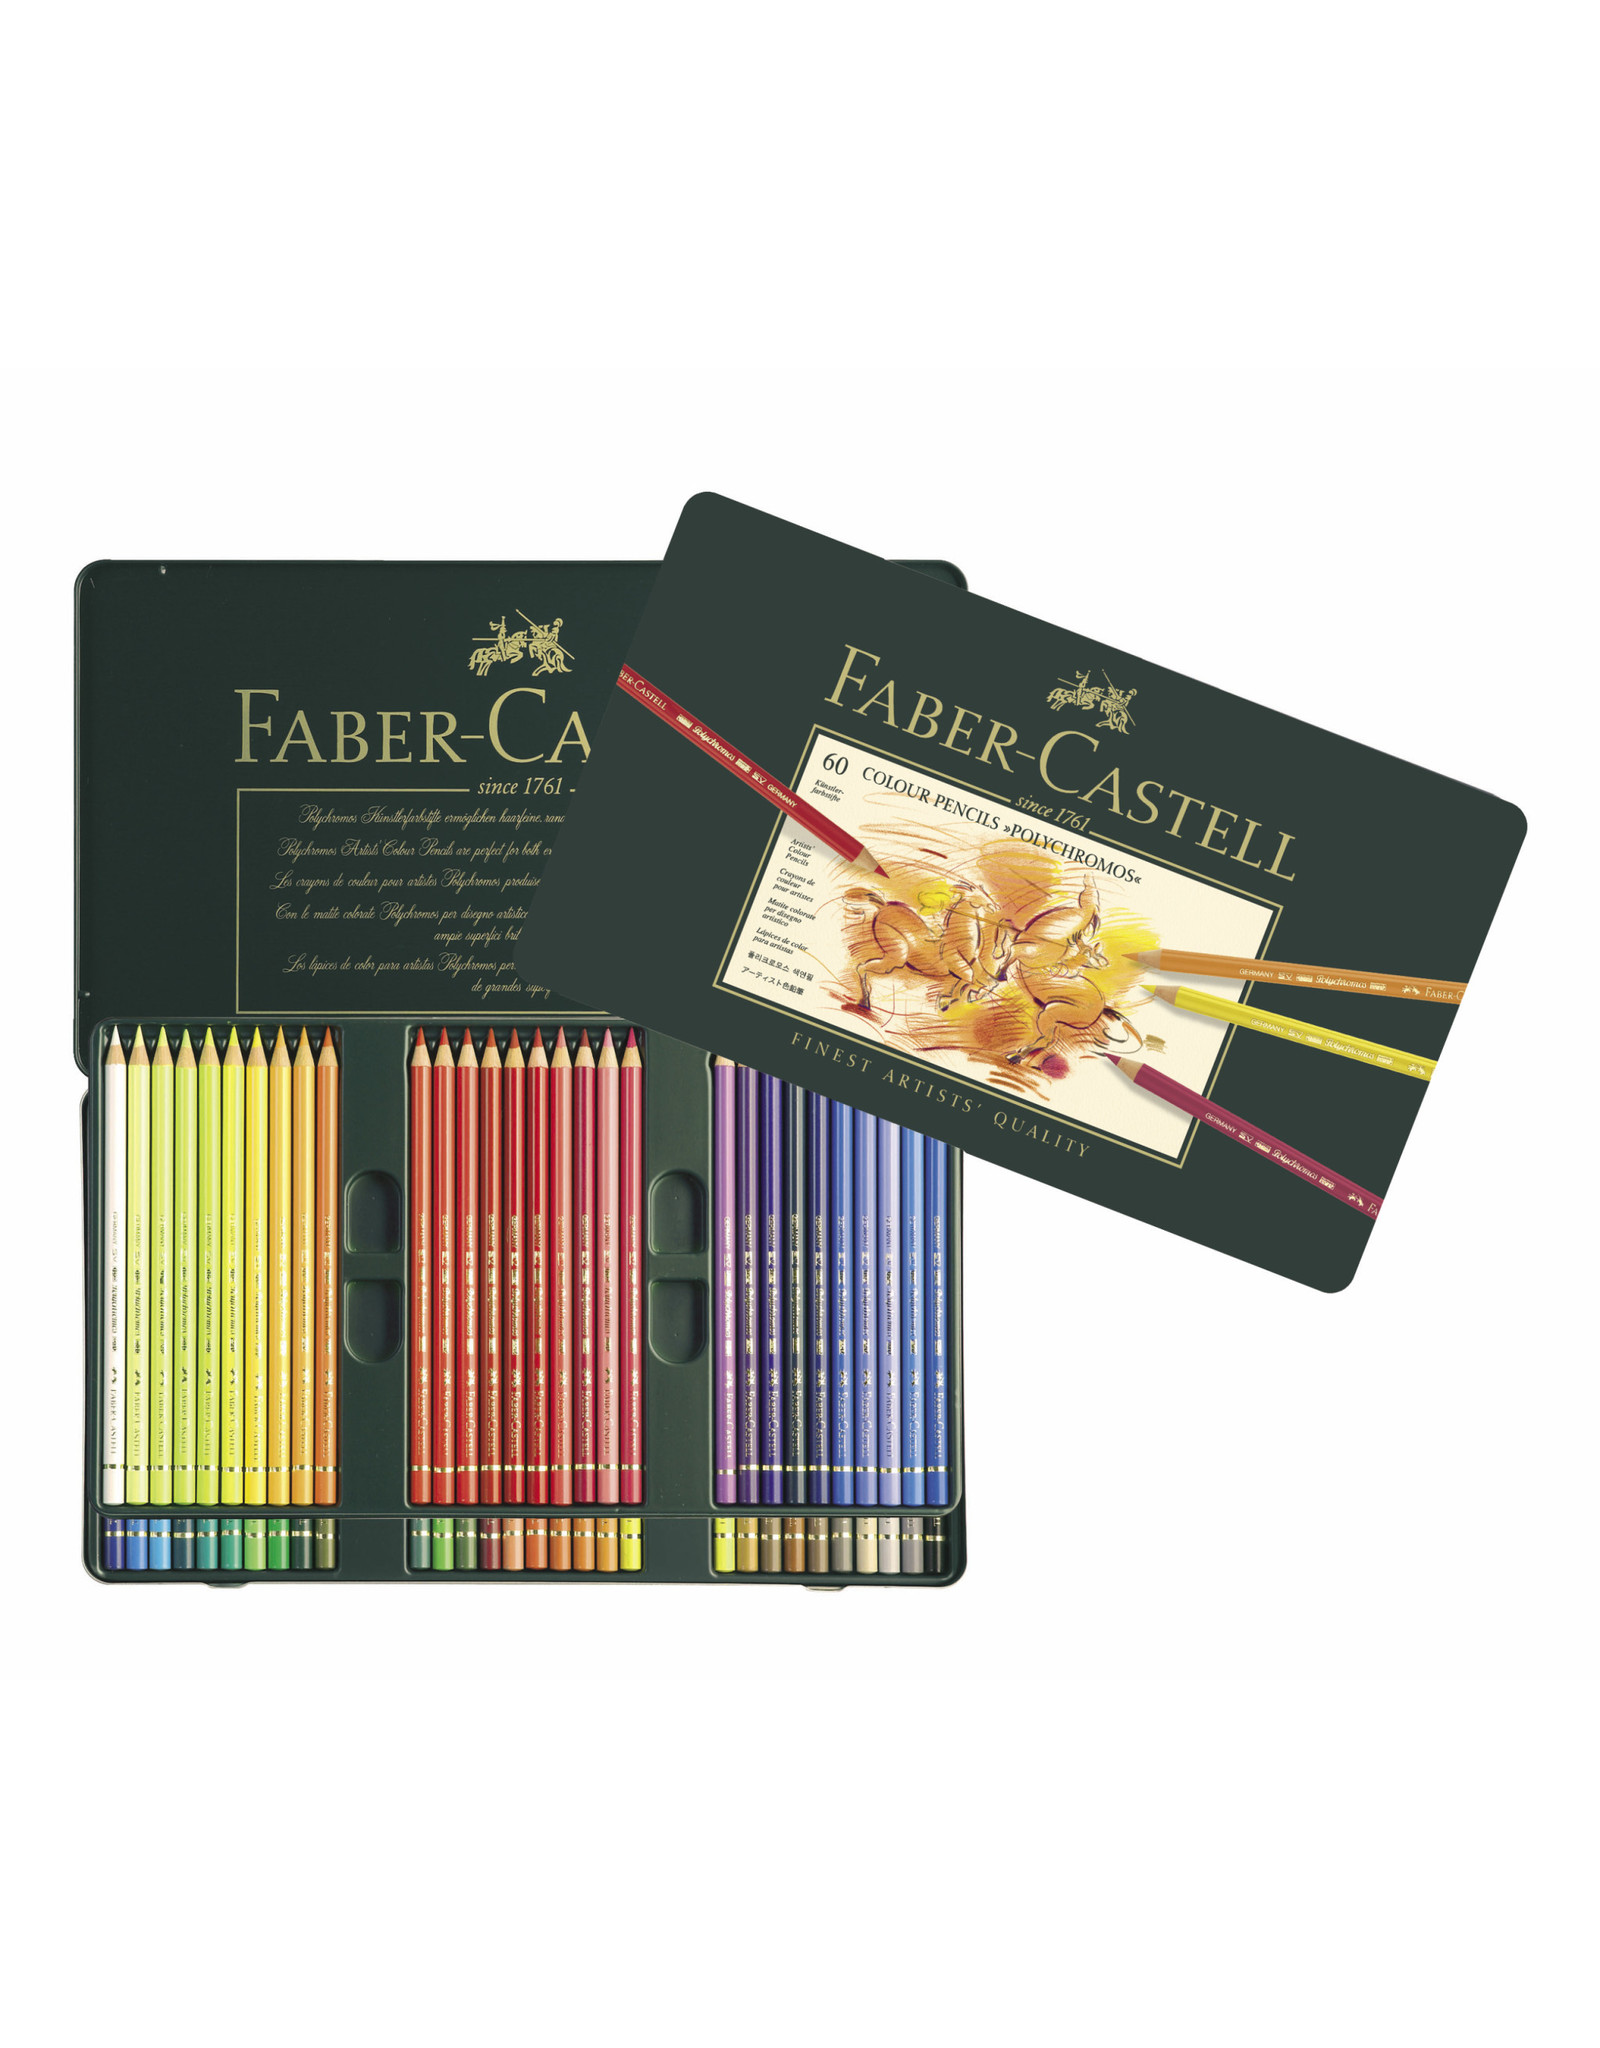 FABER-CASTELL Faber-Castel Polychromos, Set of 60